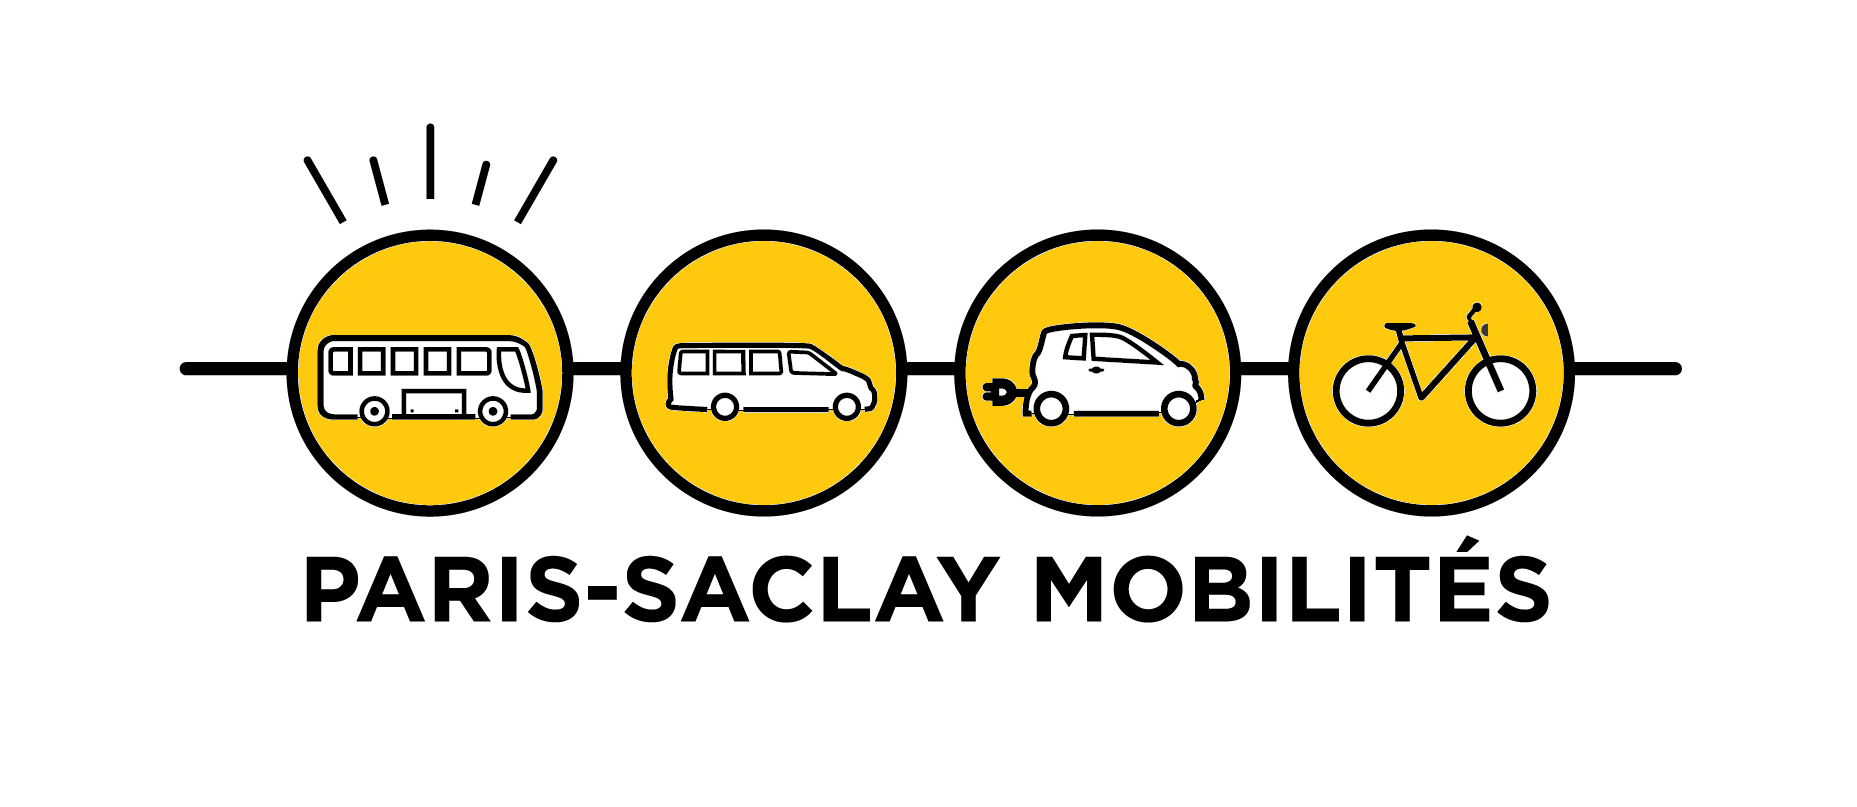 logo paris saclay mobilites bus jaune